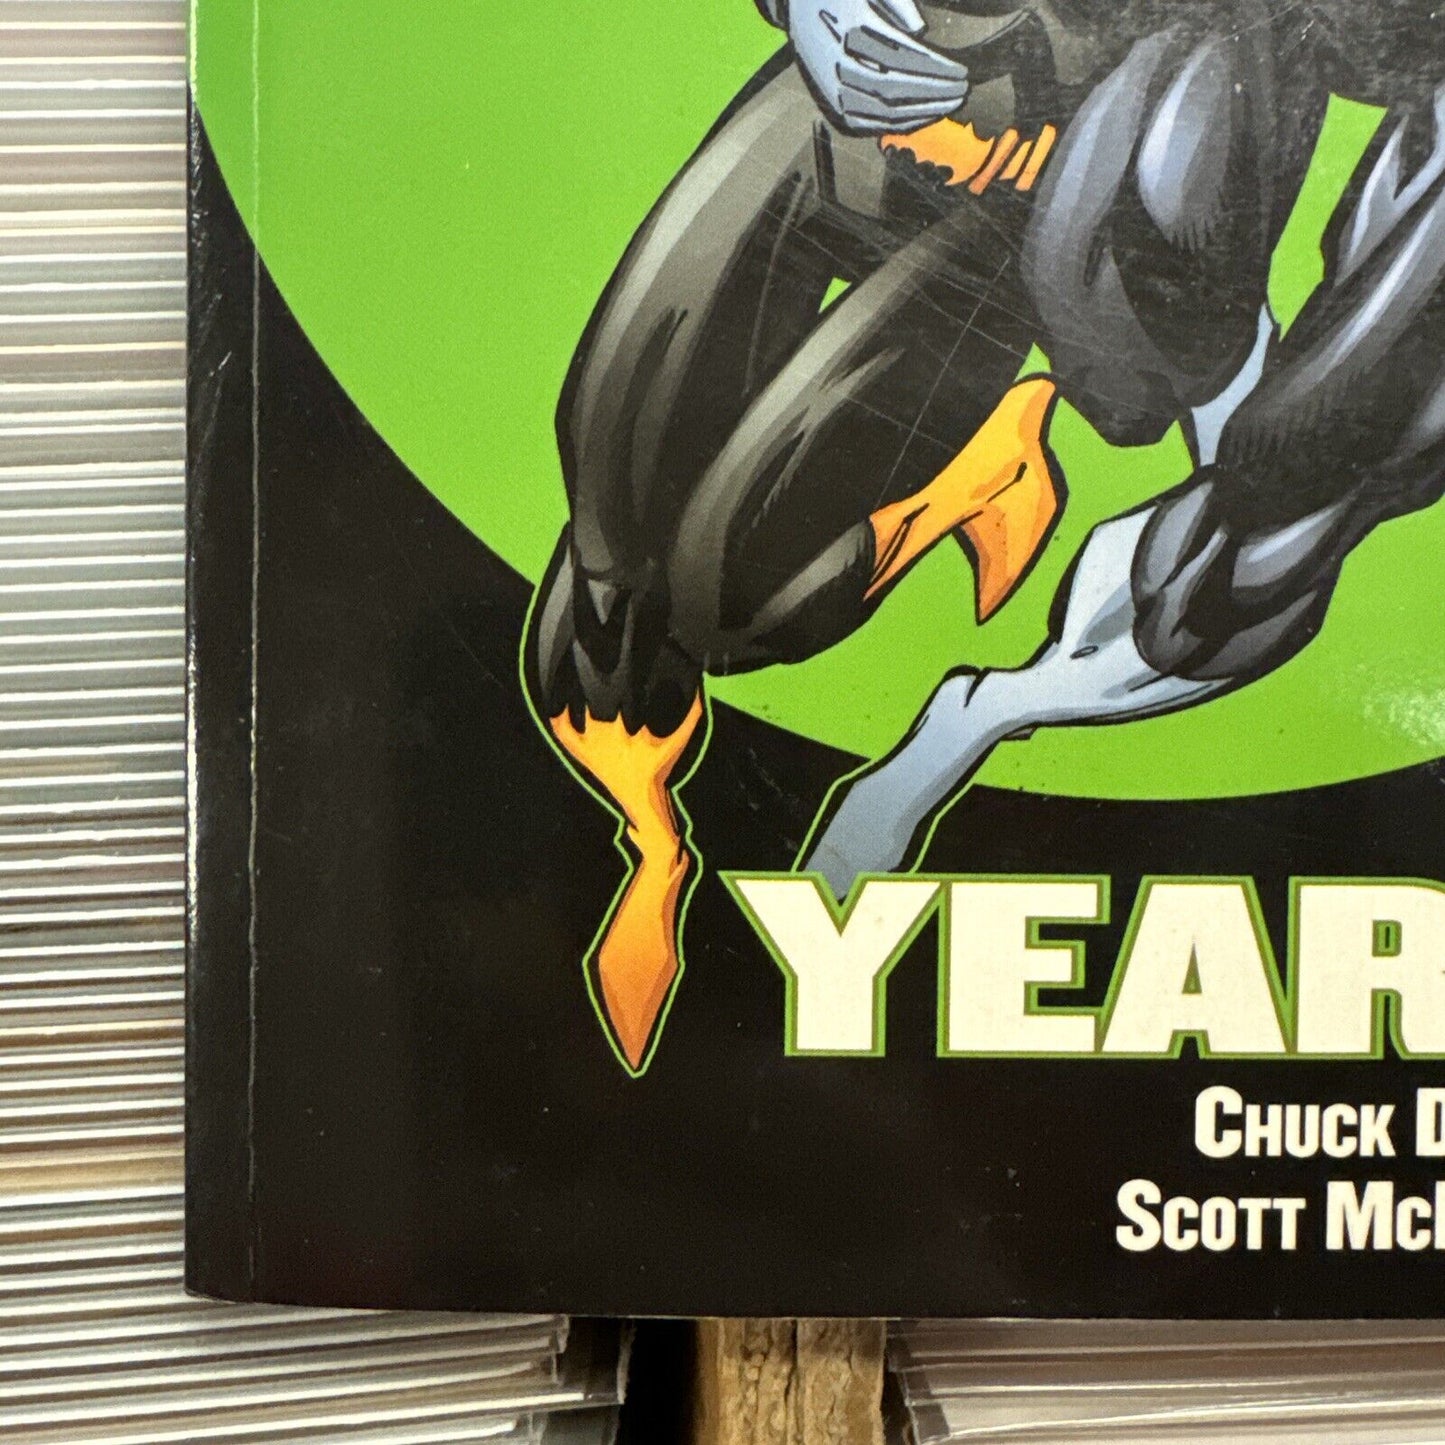 Nightwing Year One TPB DC Comics HTF RARE OOP 1st Print